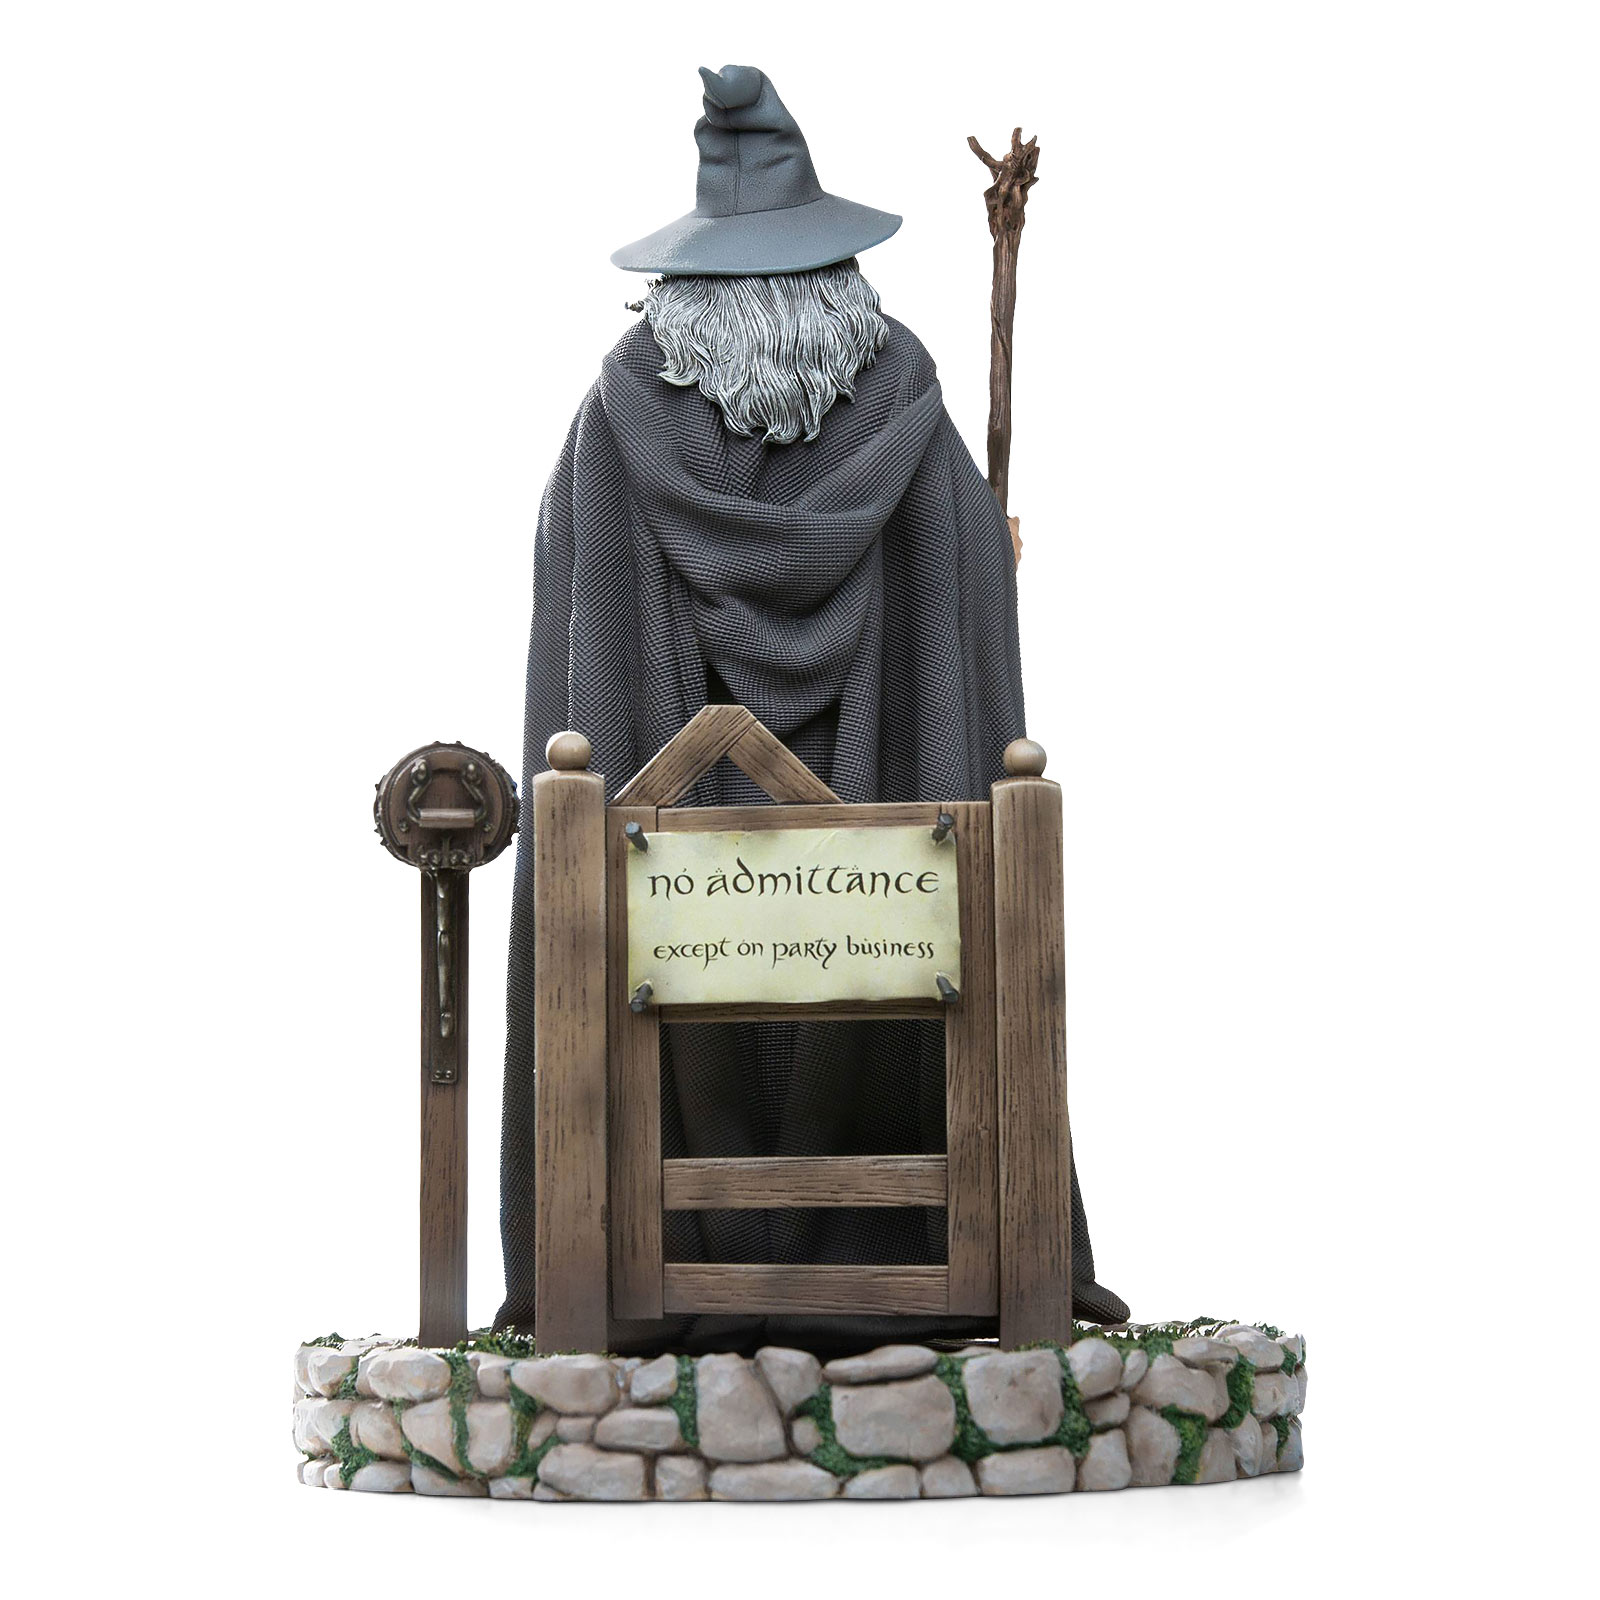 Herr der Ringe - Gandalf BDS Art Scale Deluxe Statue 23 cm